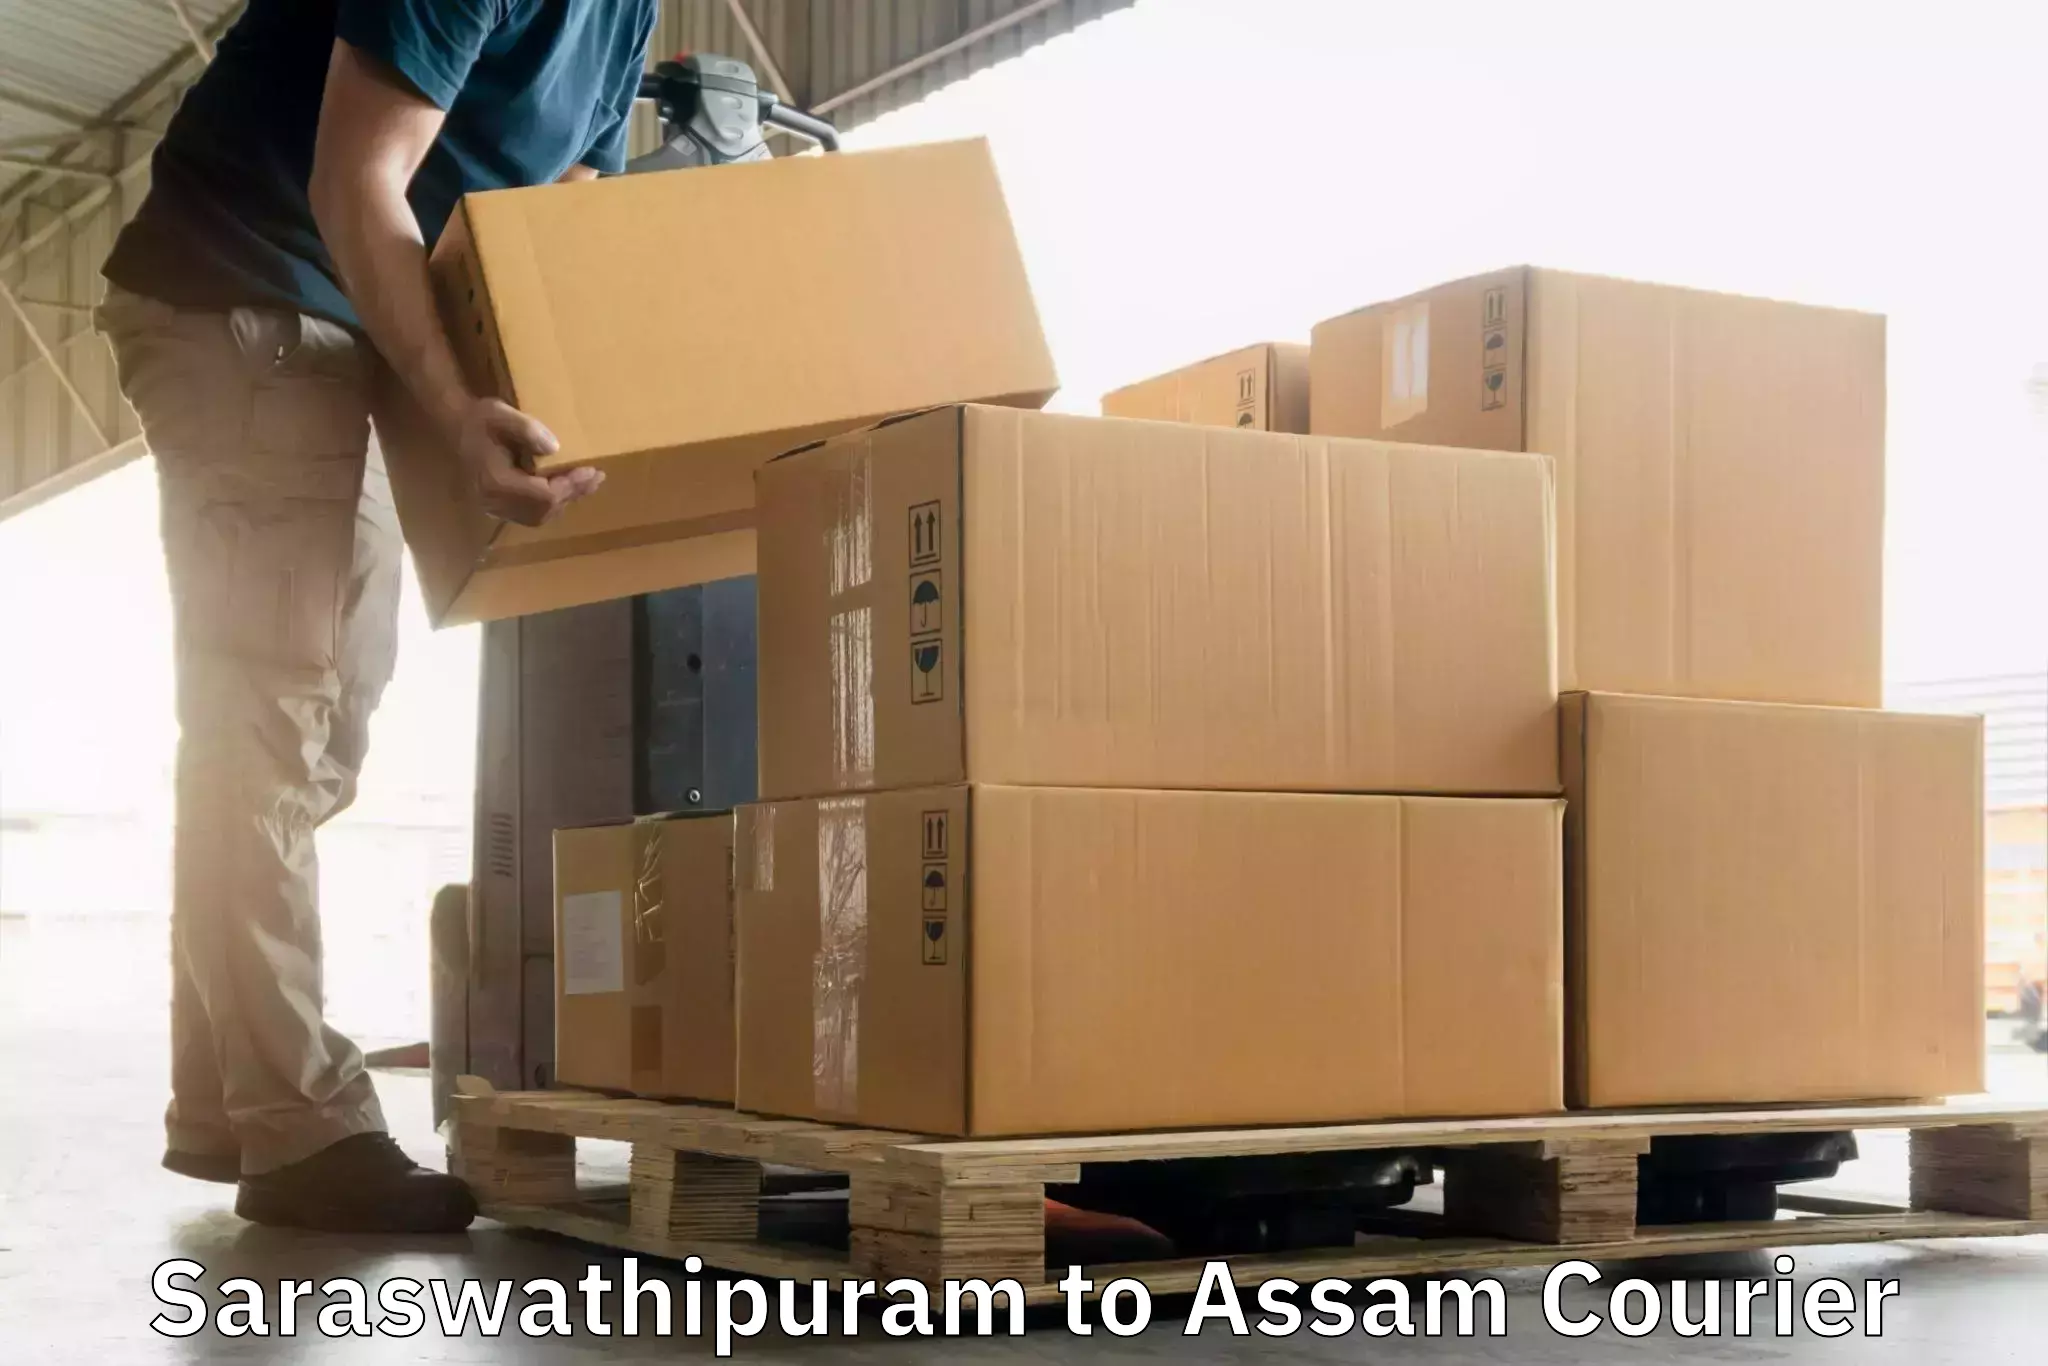 Cargo delivery service Saraswathipuram to Lala Assam